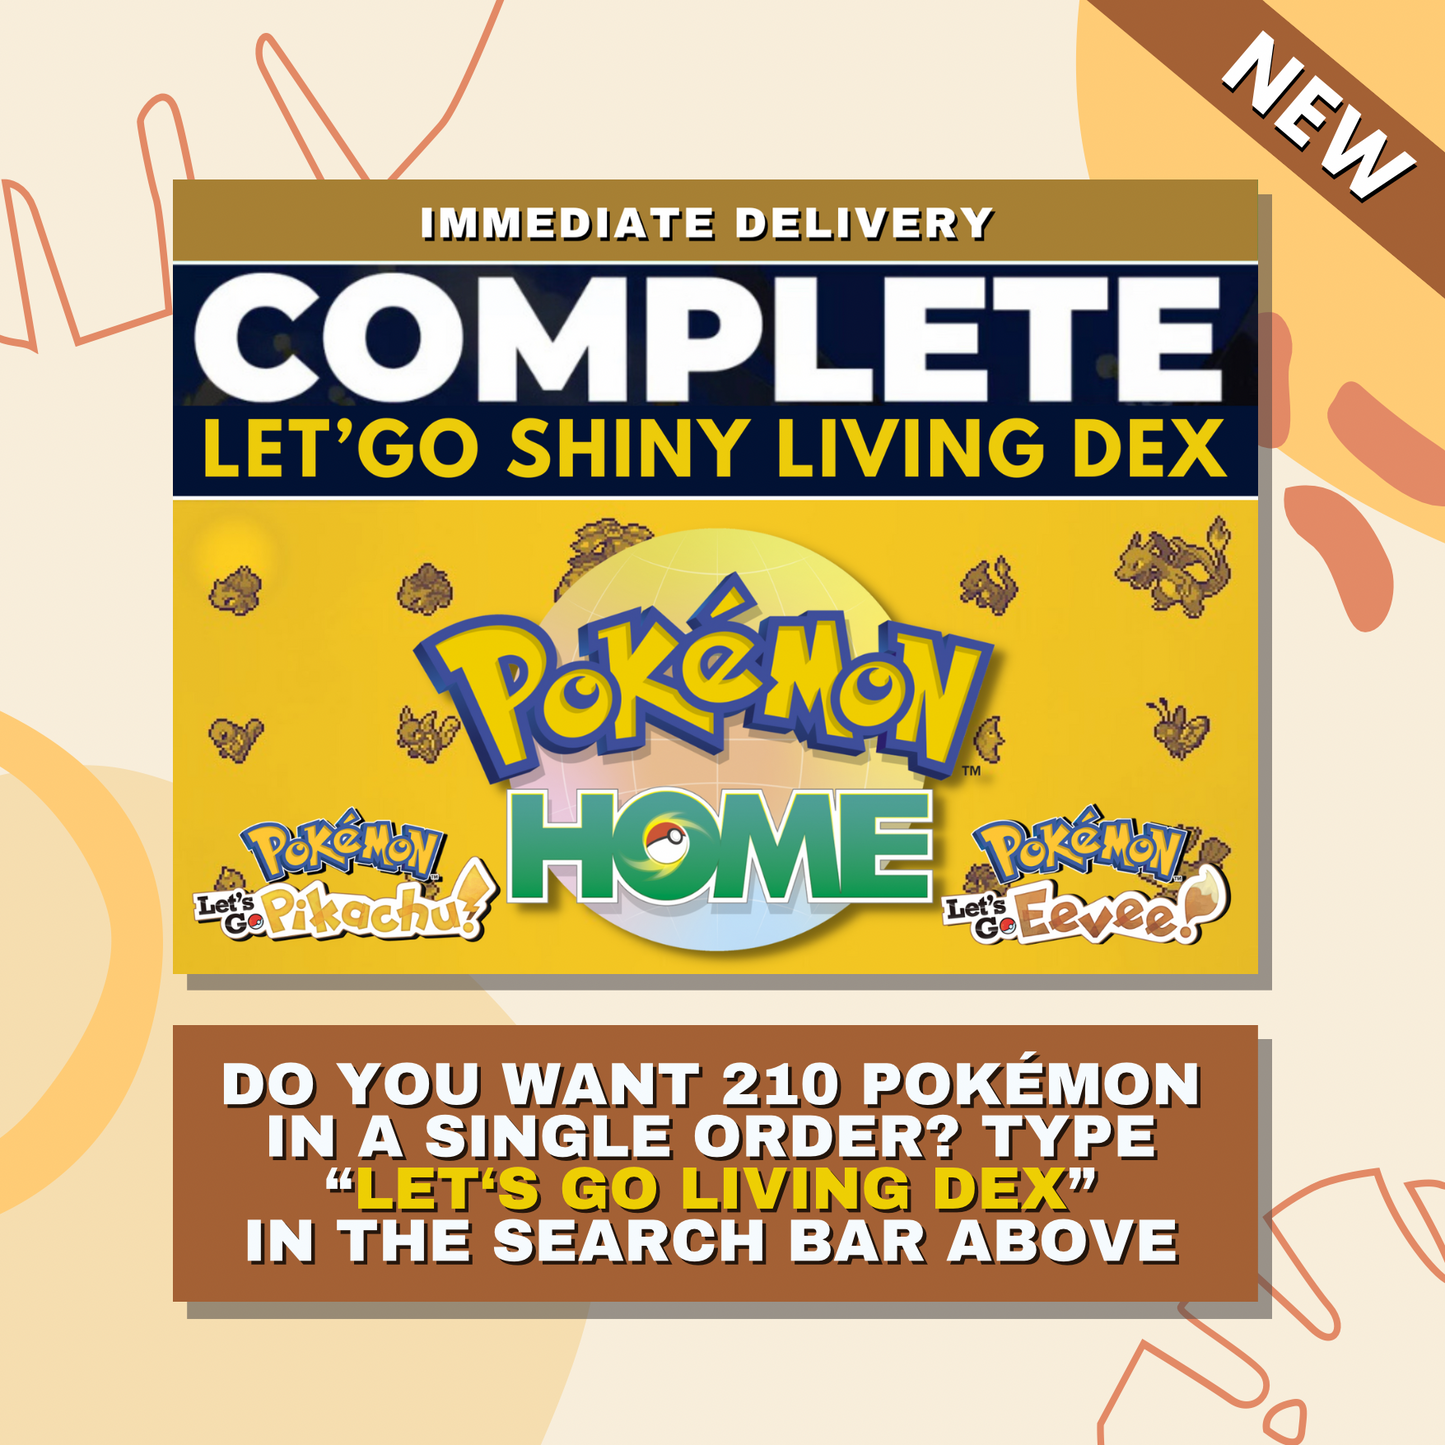 Ninetales Alolan Shiny ✨ or Non Shiny Pokémon Let's Go Pikachu Eevee Level 100 Competitive Battle Ready 6 IV 100% Legit Legal Customizable Custom OT by Shiny Living Dex | Shiny Living Dex